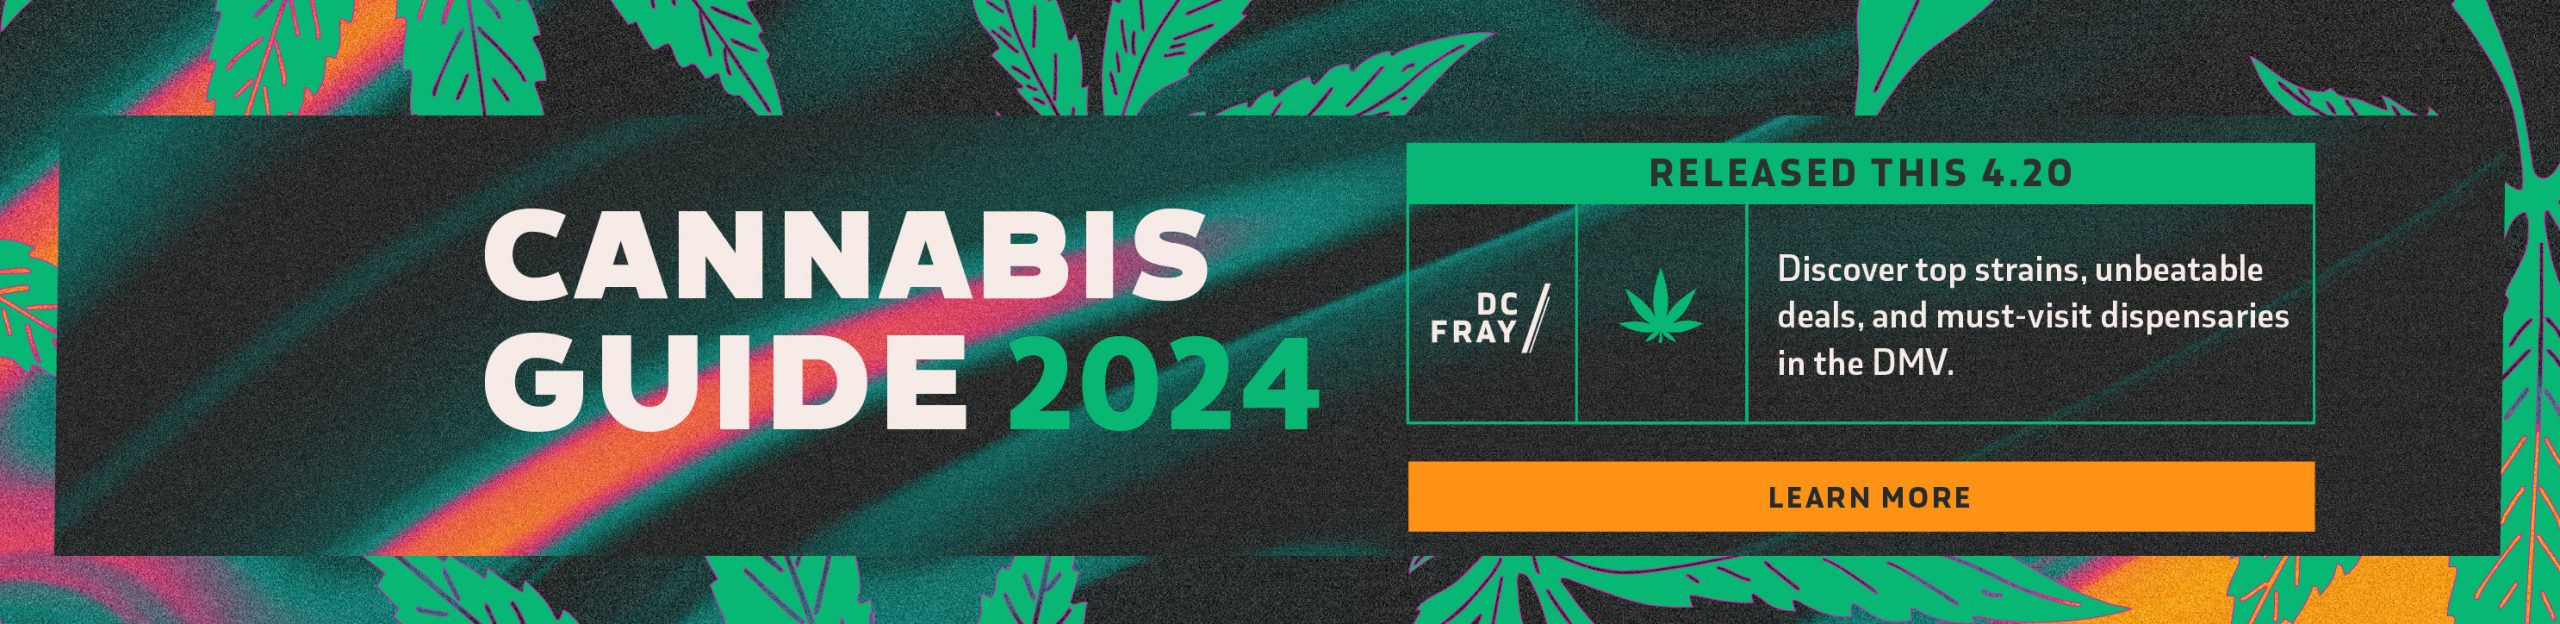 DC Fray Cannabis Guide 2024